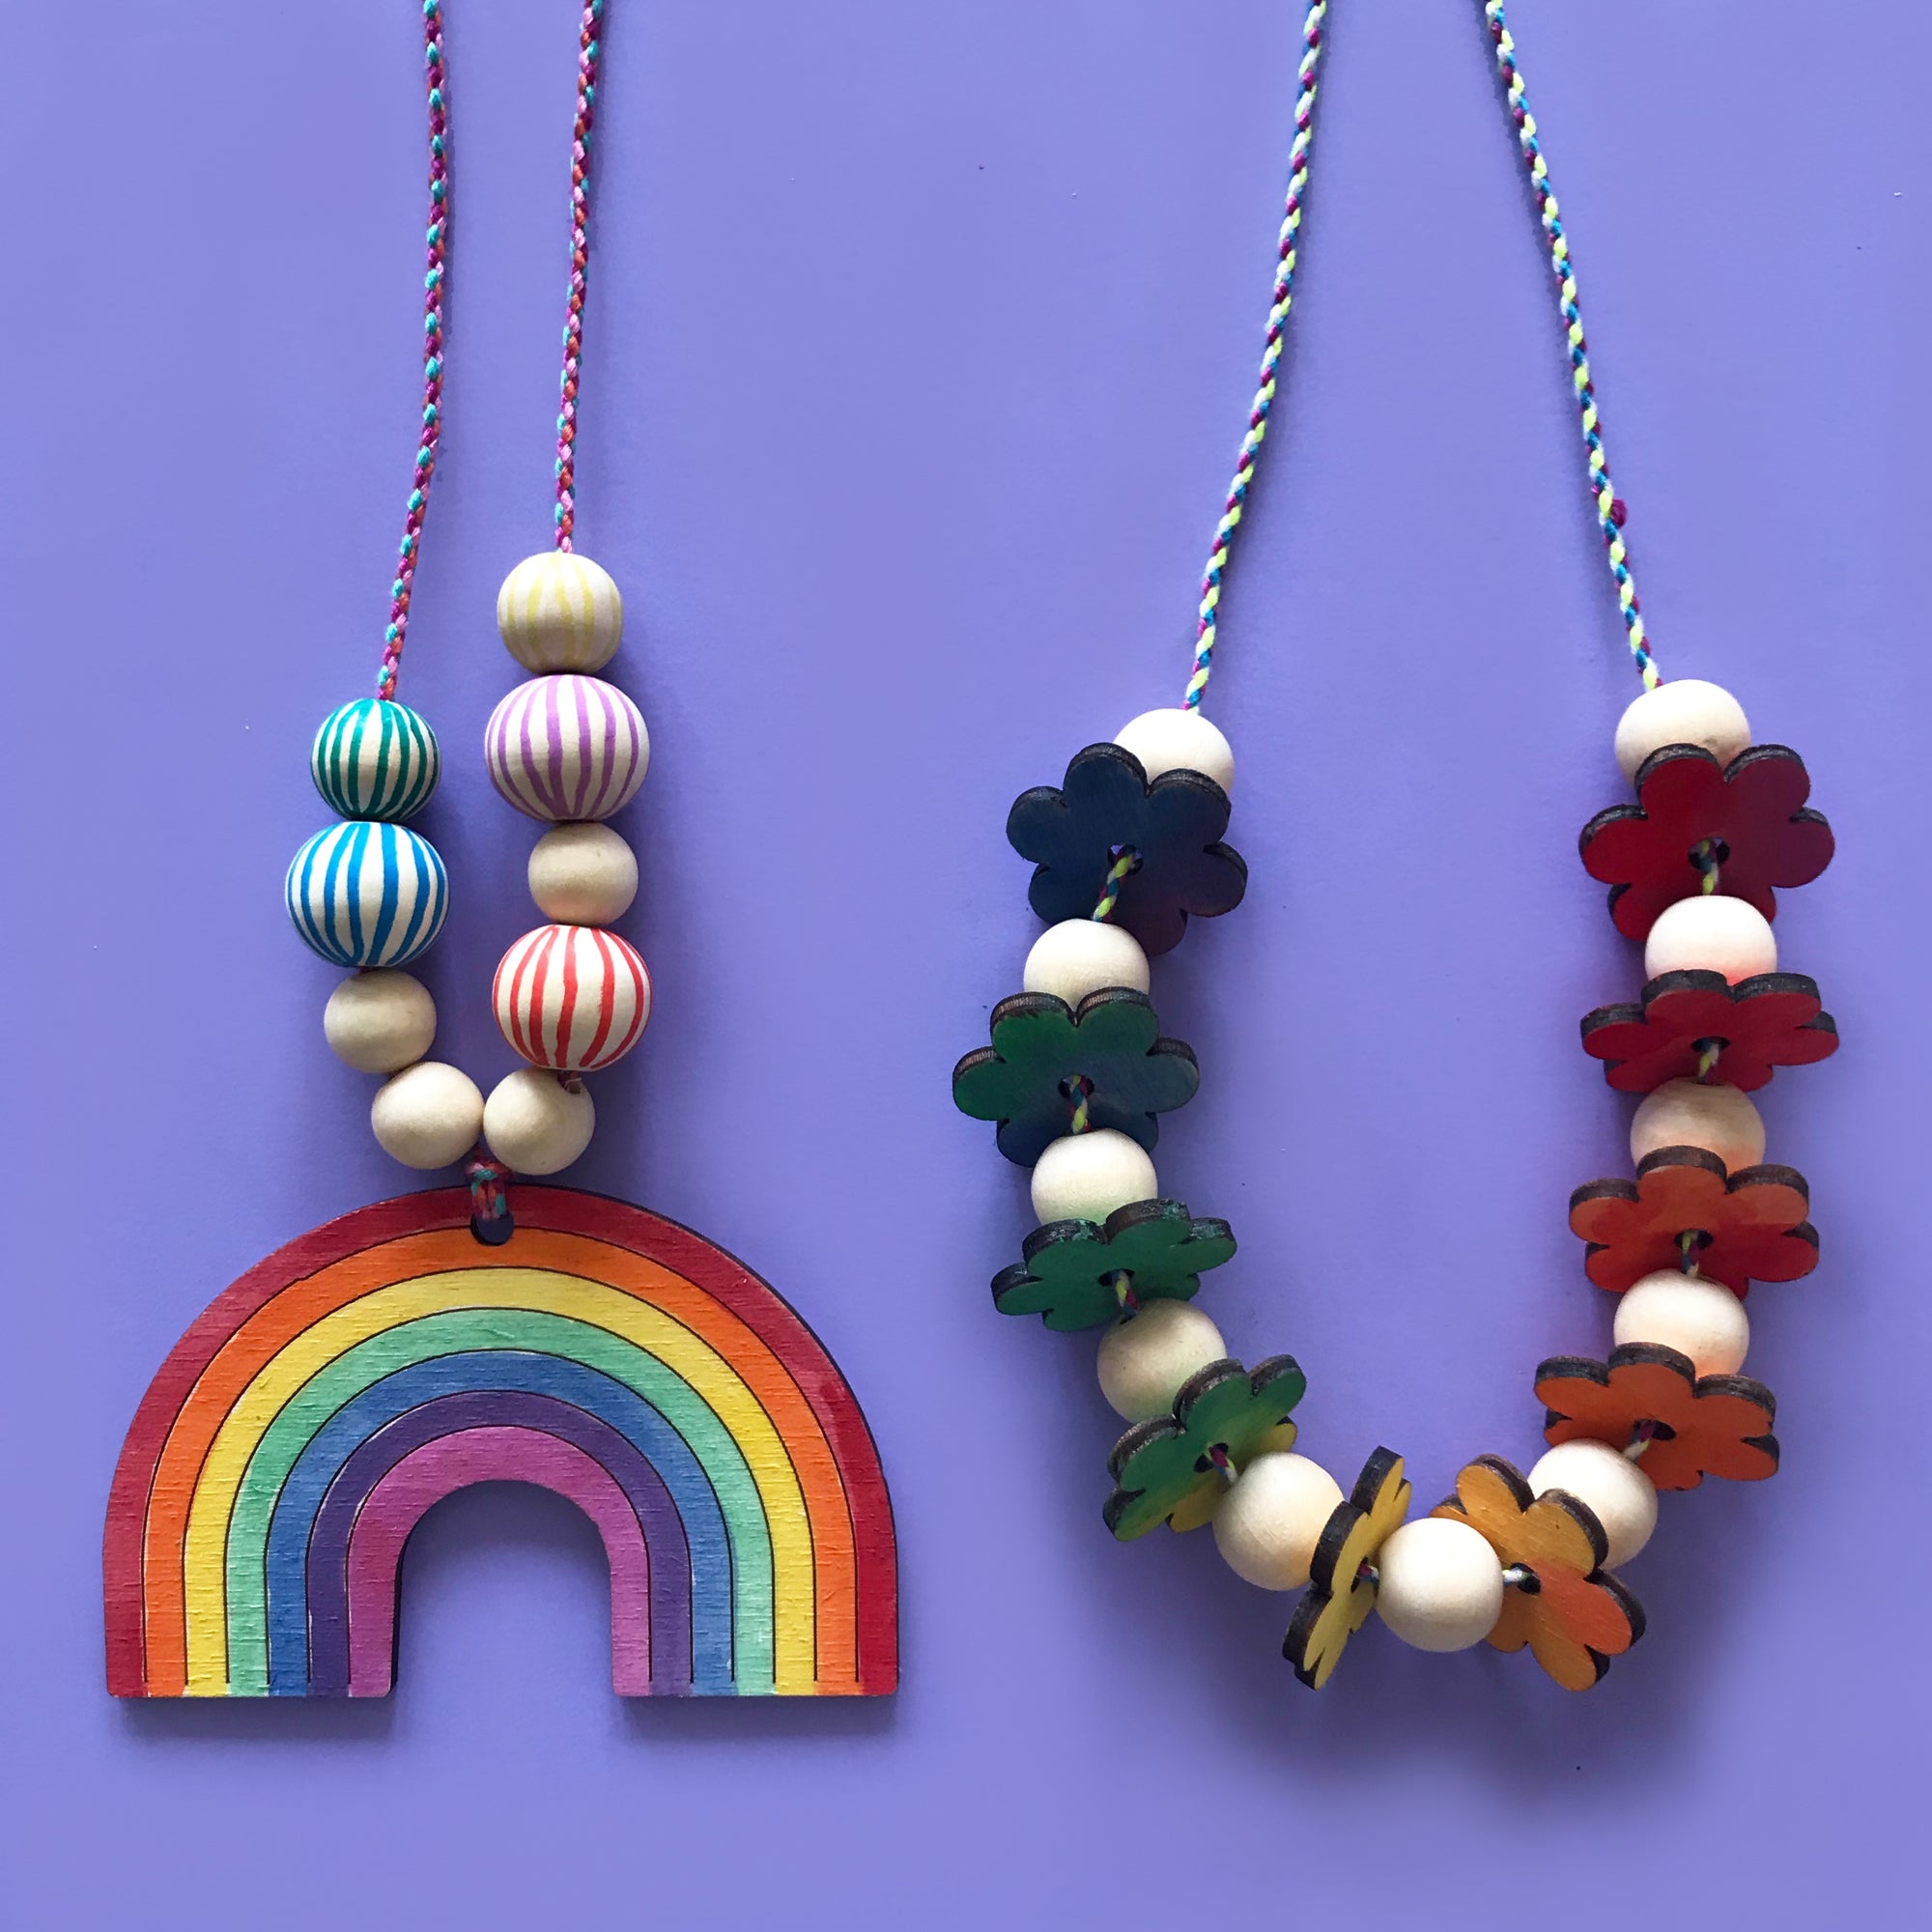 Necklace Craft Kit - Rainbow & Flowers - 25% OFF